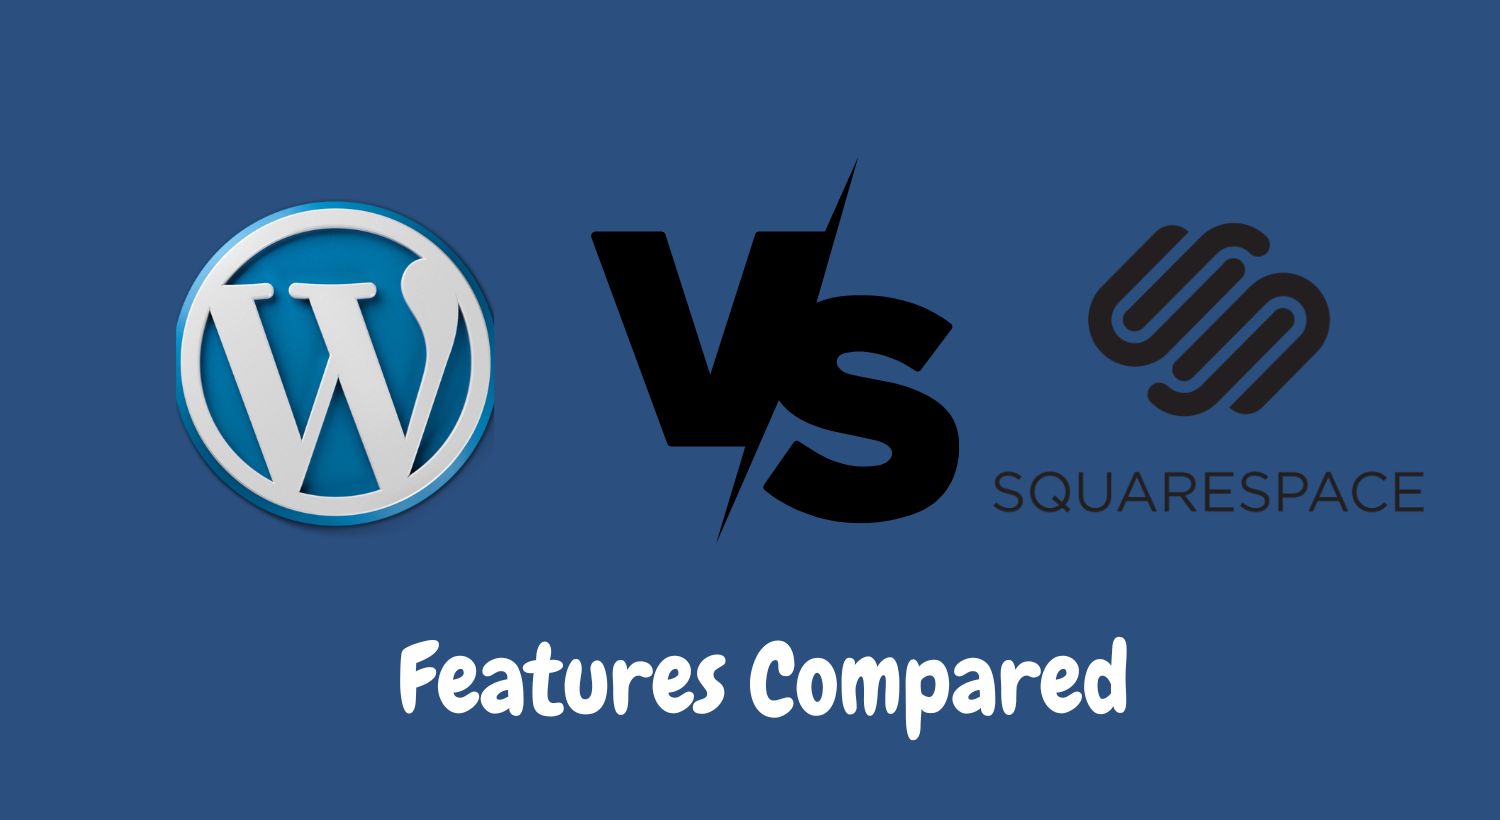 wordpress-vs-squarespace